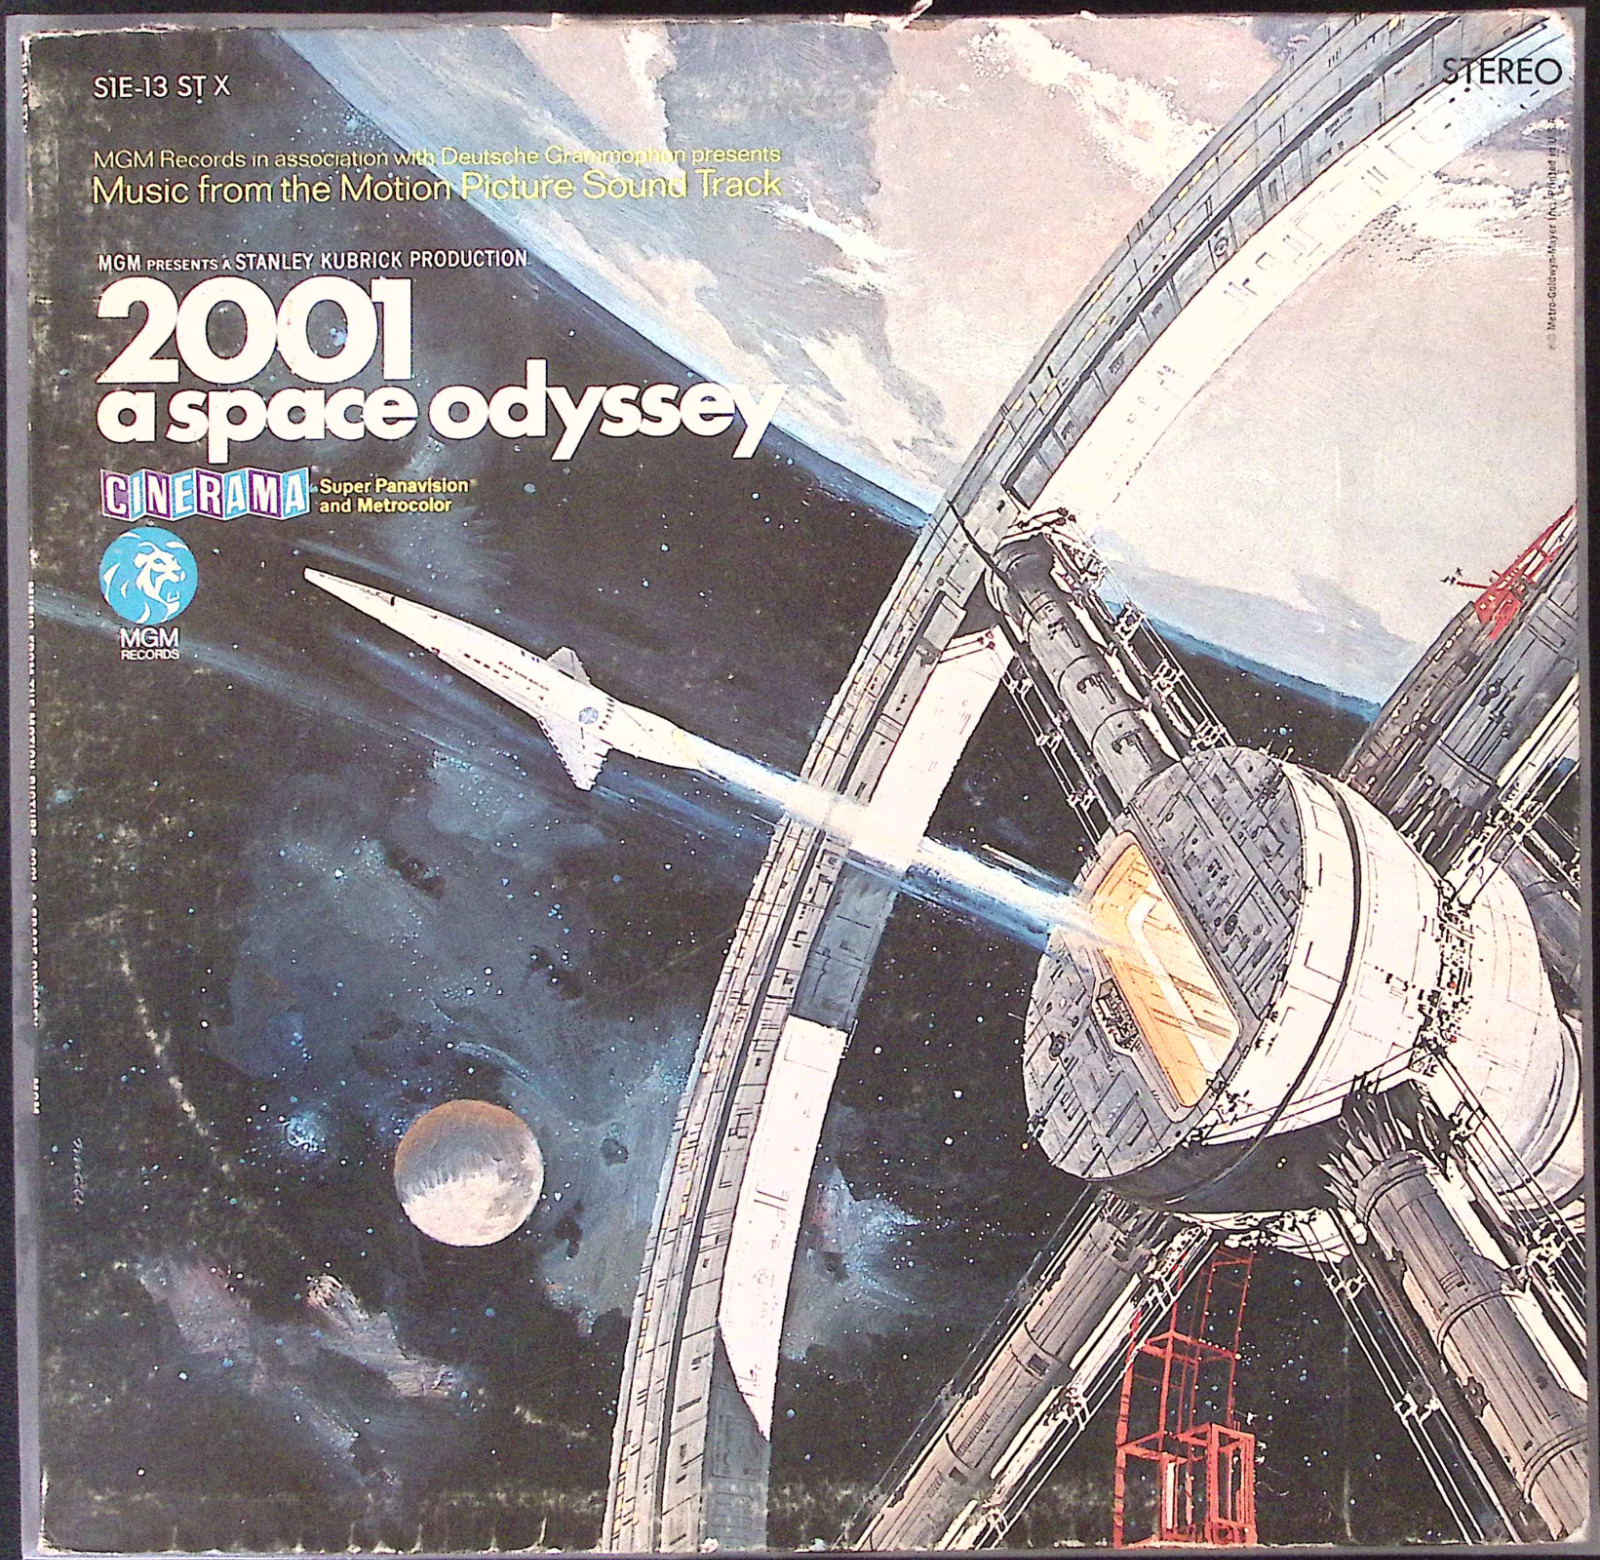 2001 A SPACE QDYSSEY MGM RECORDS VINYL LP   159-29W